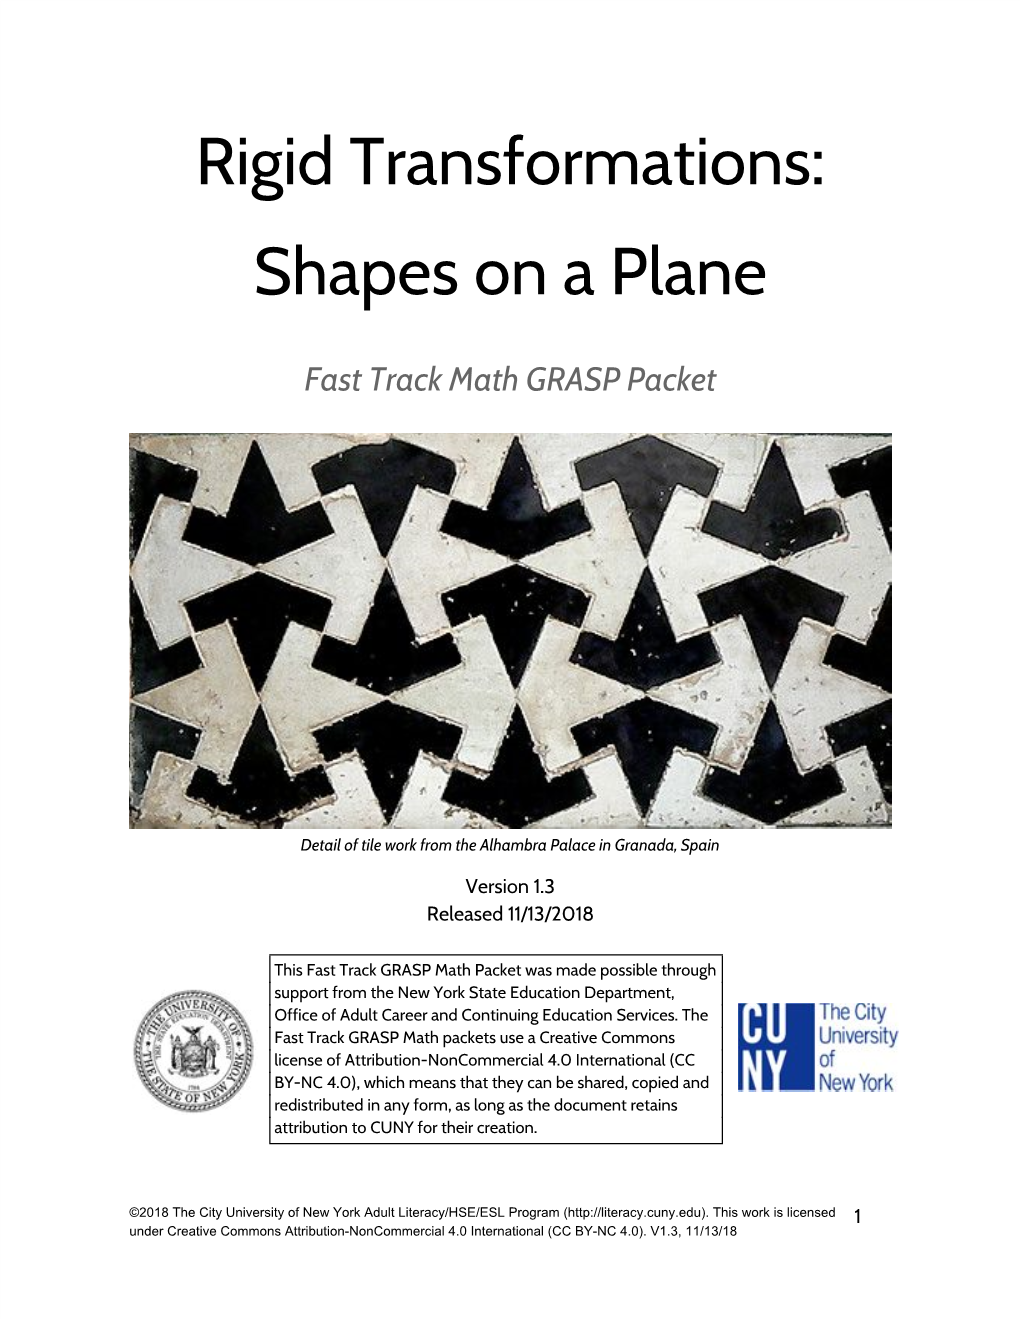 Rigid Transformations: Shapes on a Plane